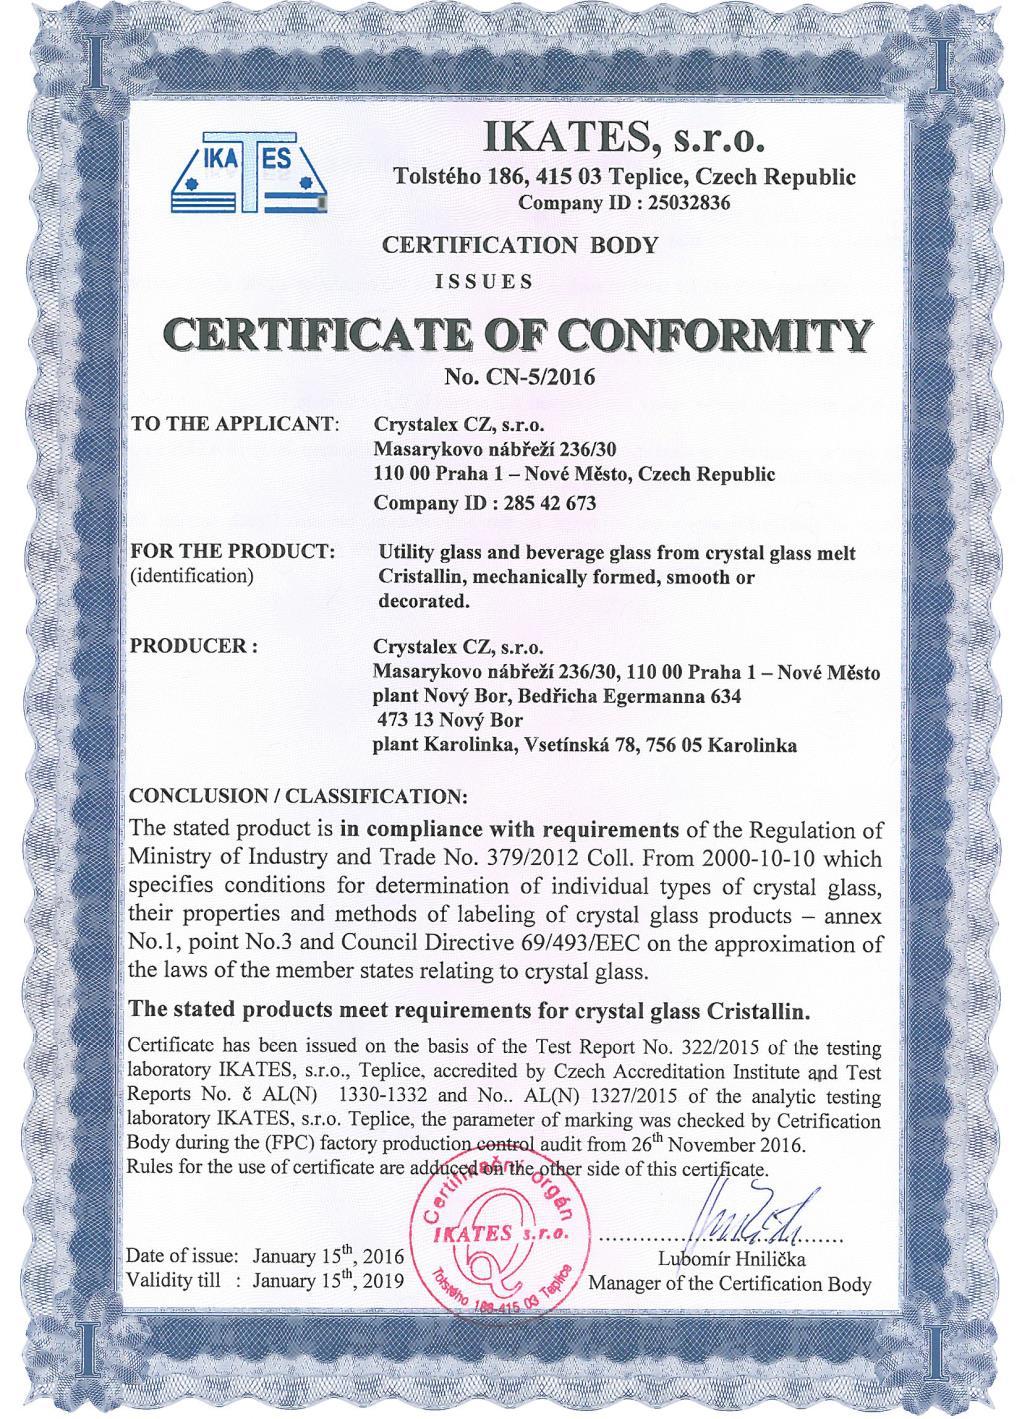 Certifikát shody skla produkce CX s